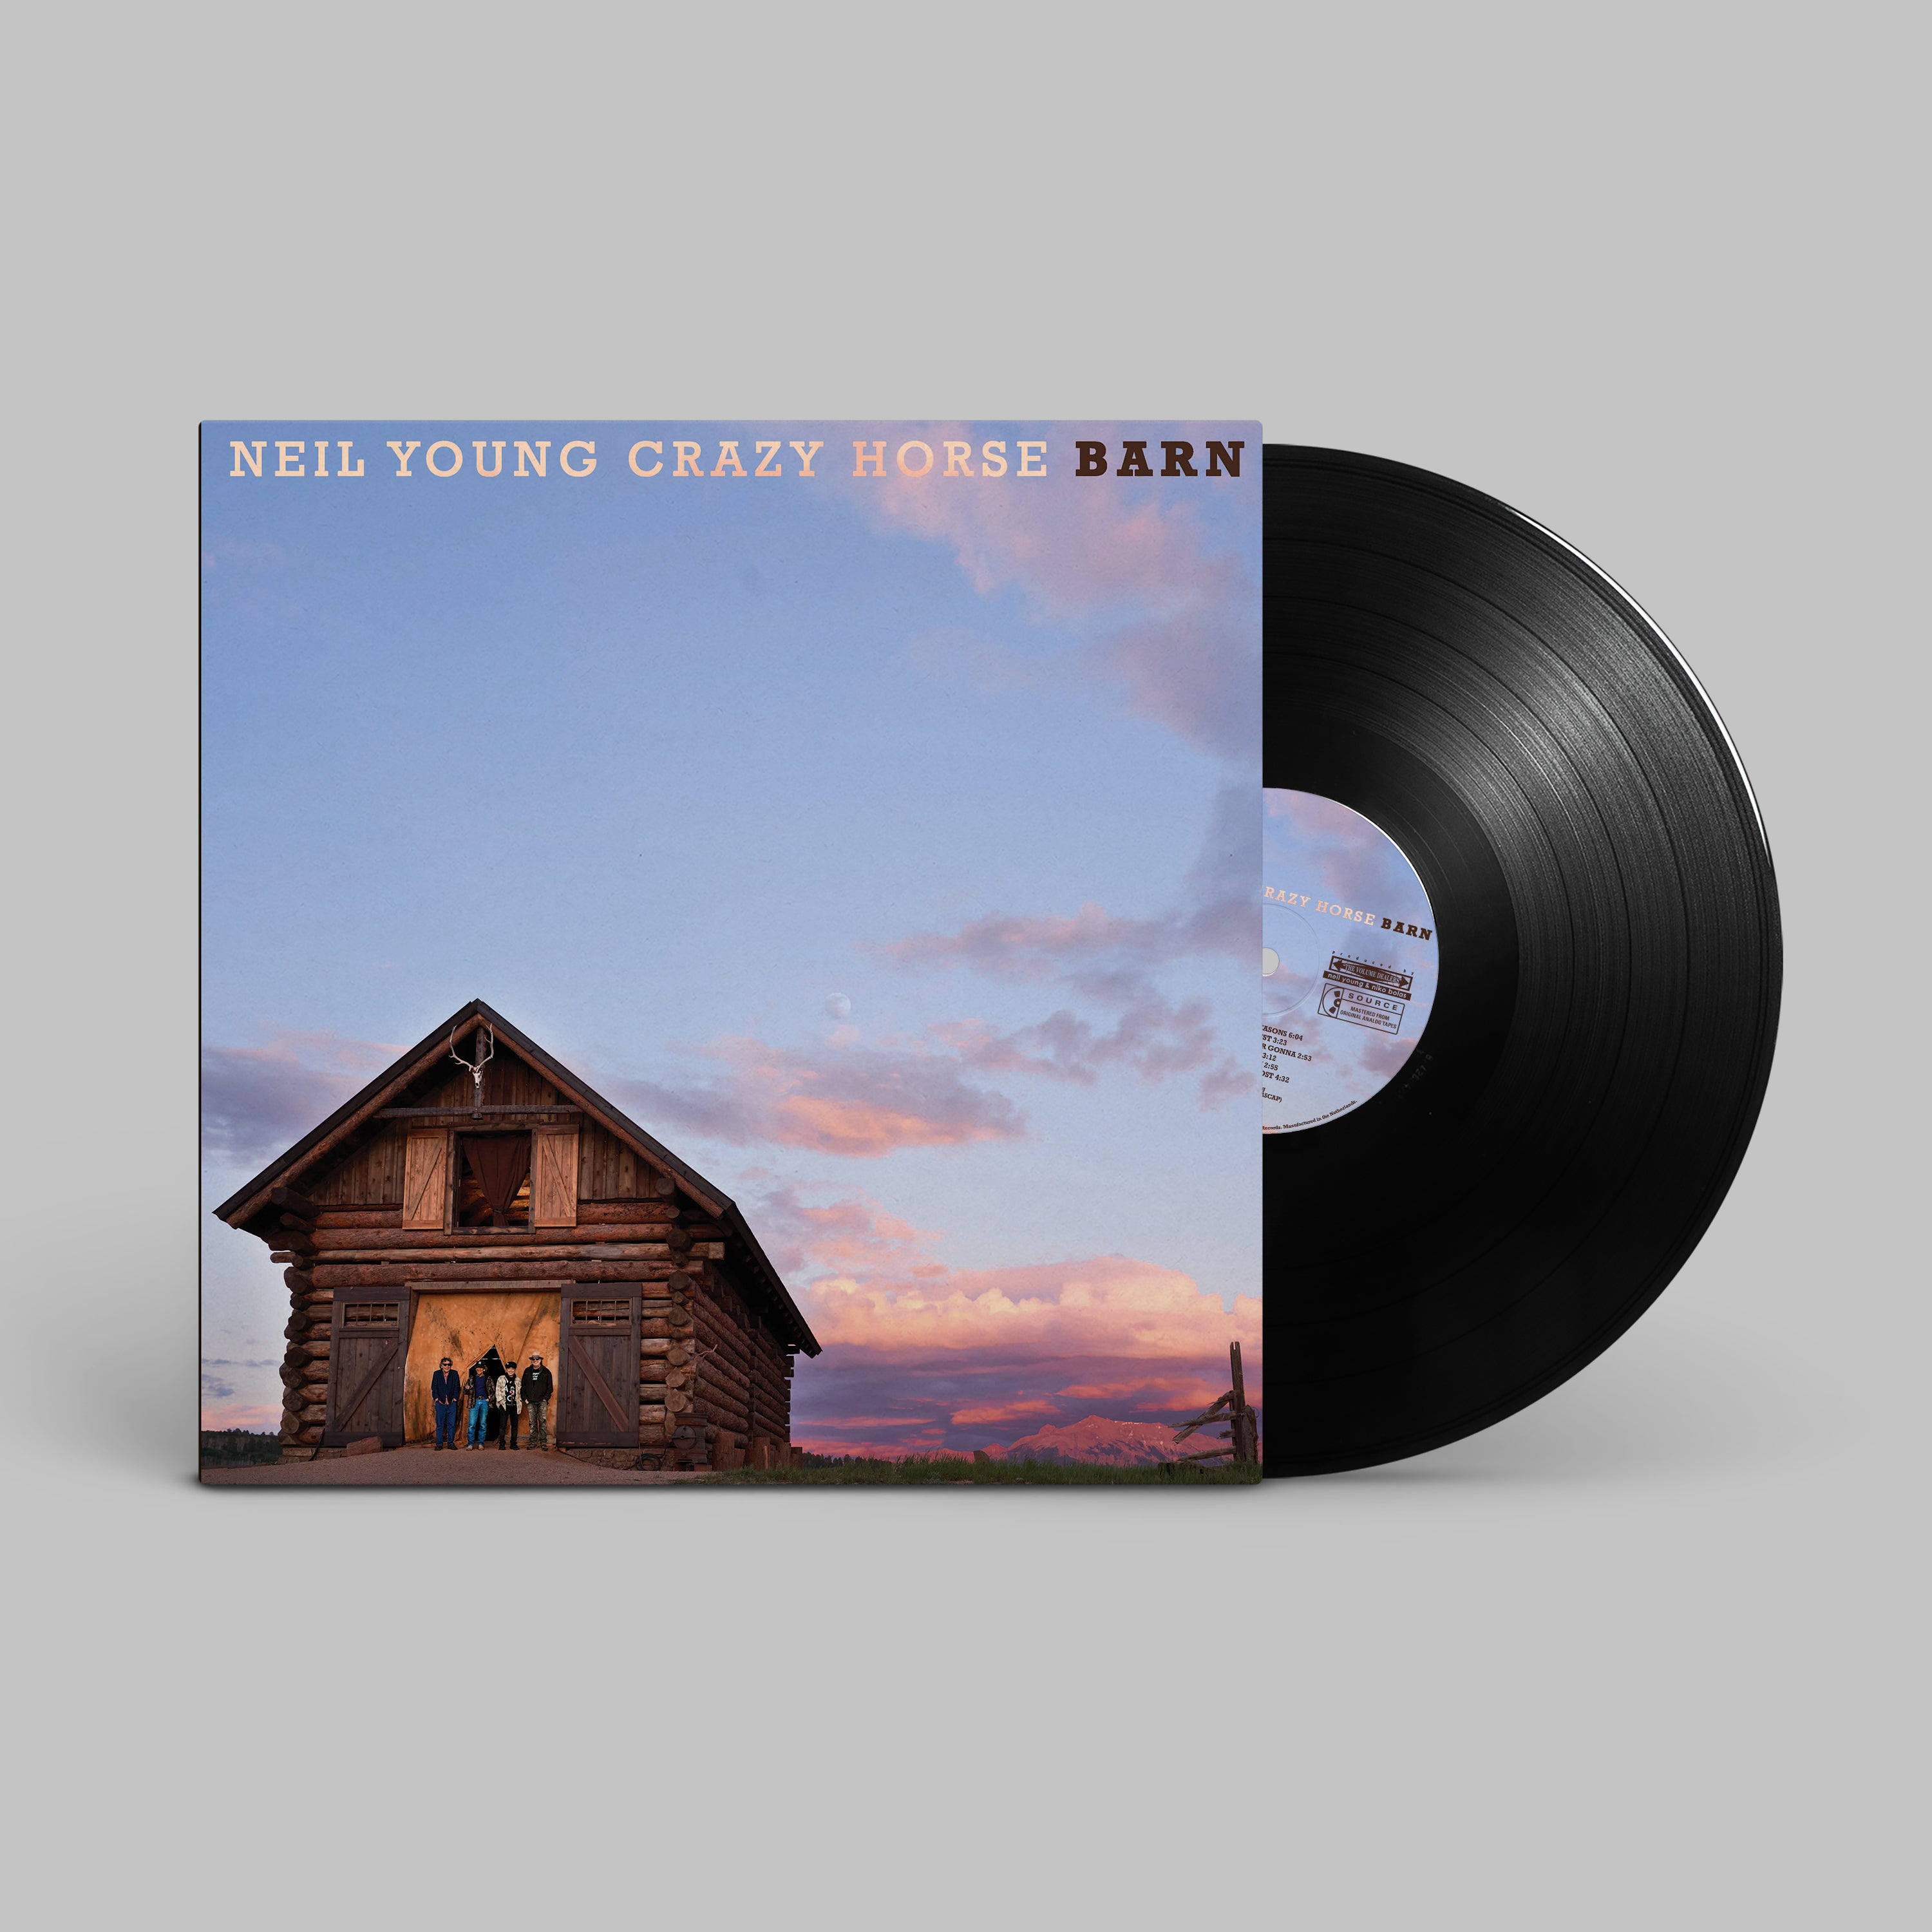 Neil Young & Crazy Horse | Barn (Deluxe Edition) | Vinyl